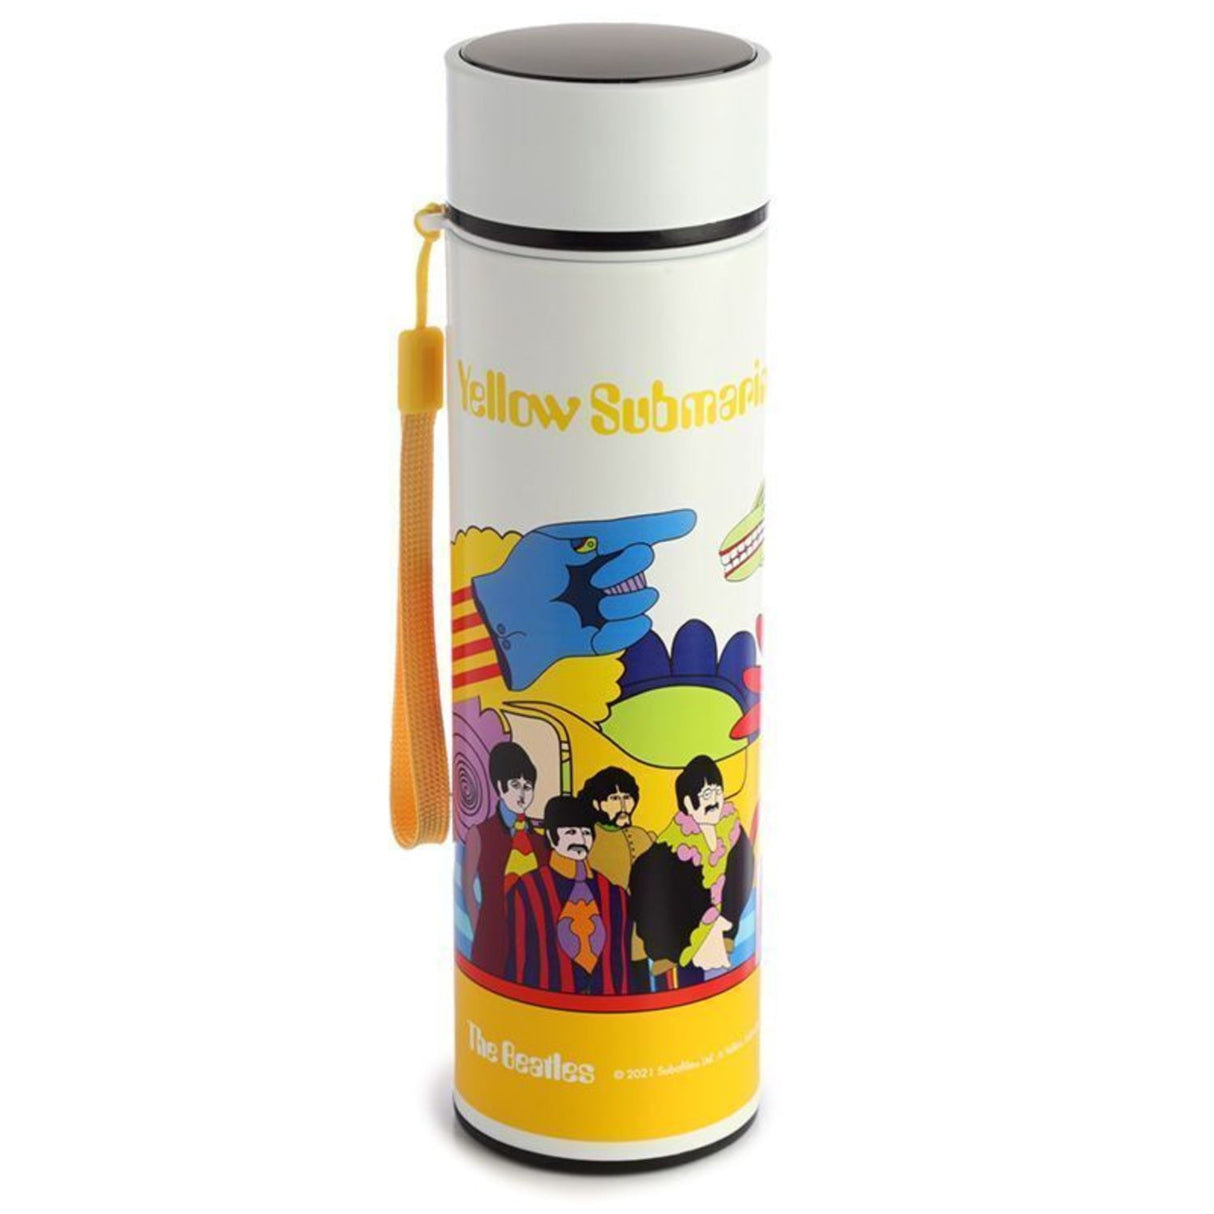 Yellow Submarine Beatles Trinkflasche mit Digital Thermometer